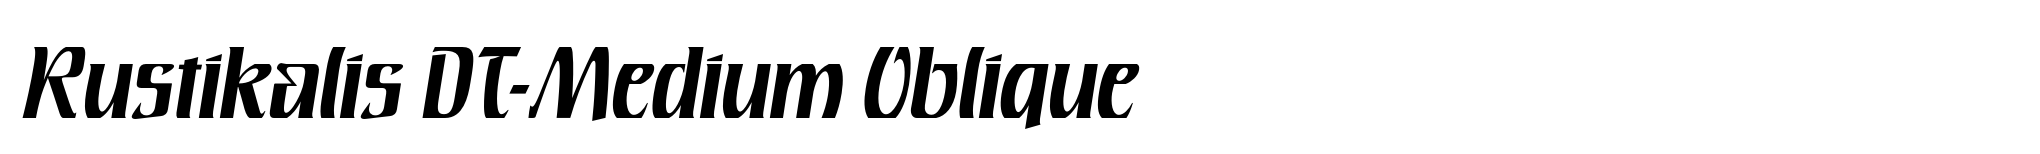 Rustikalis DT-Medium Oblique image